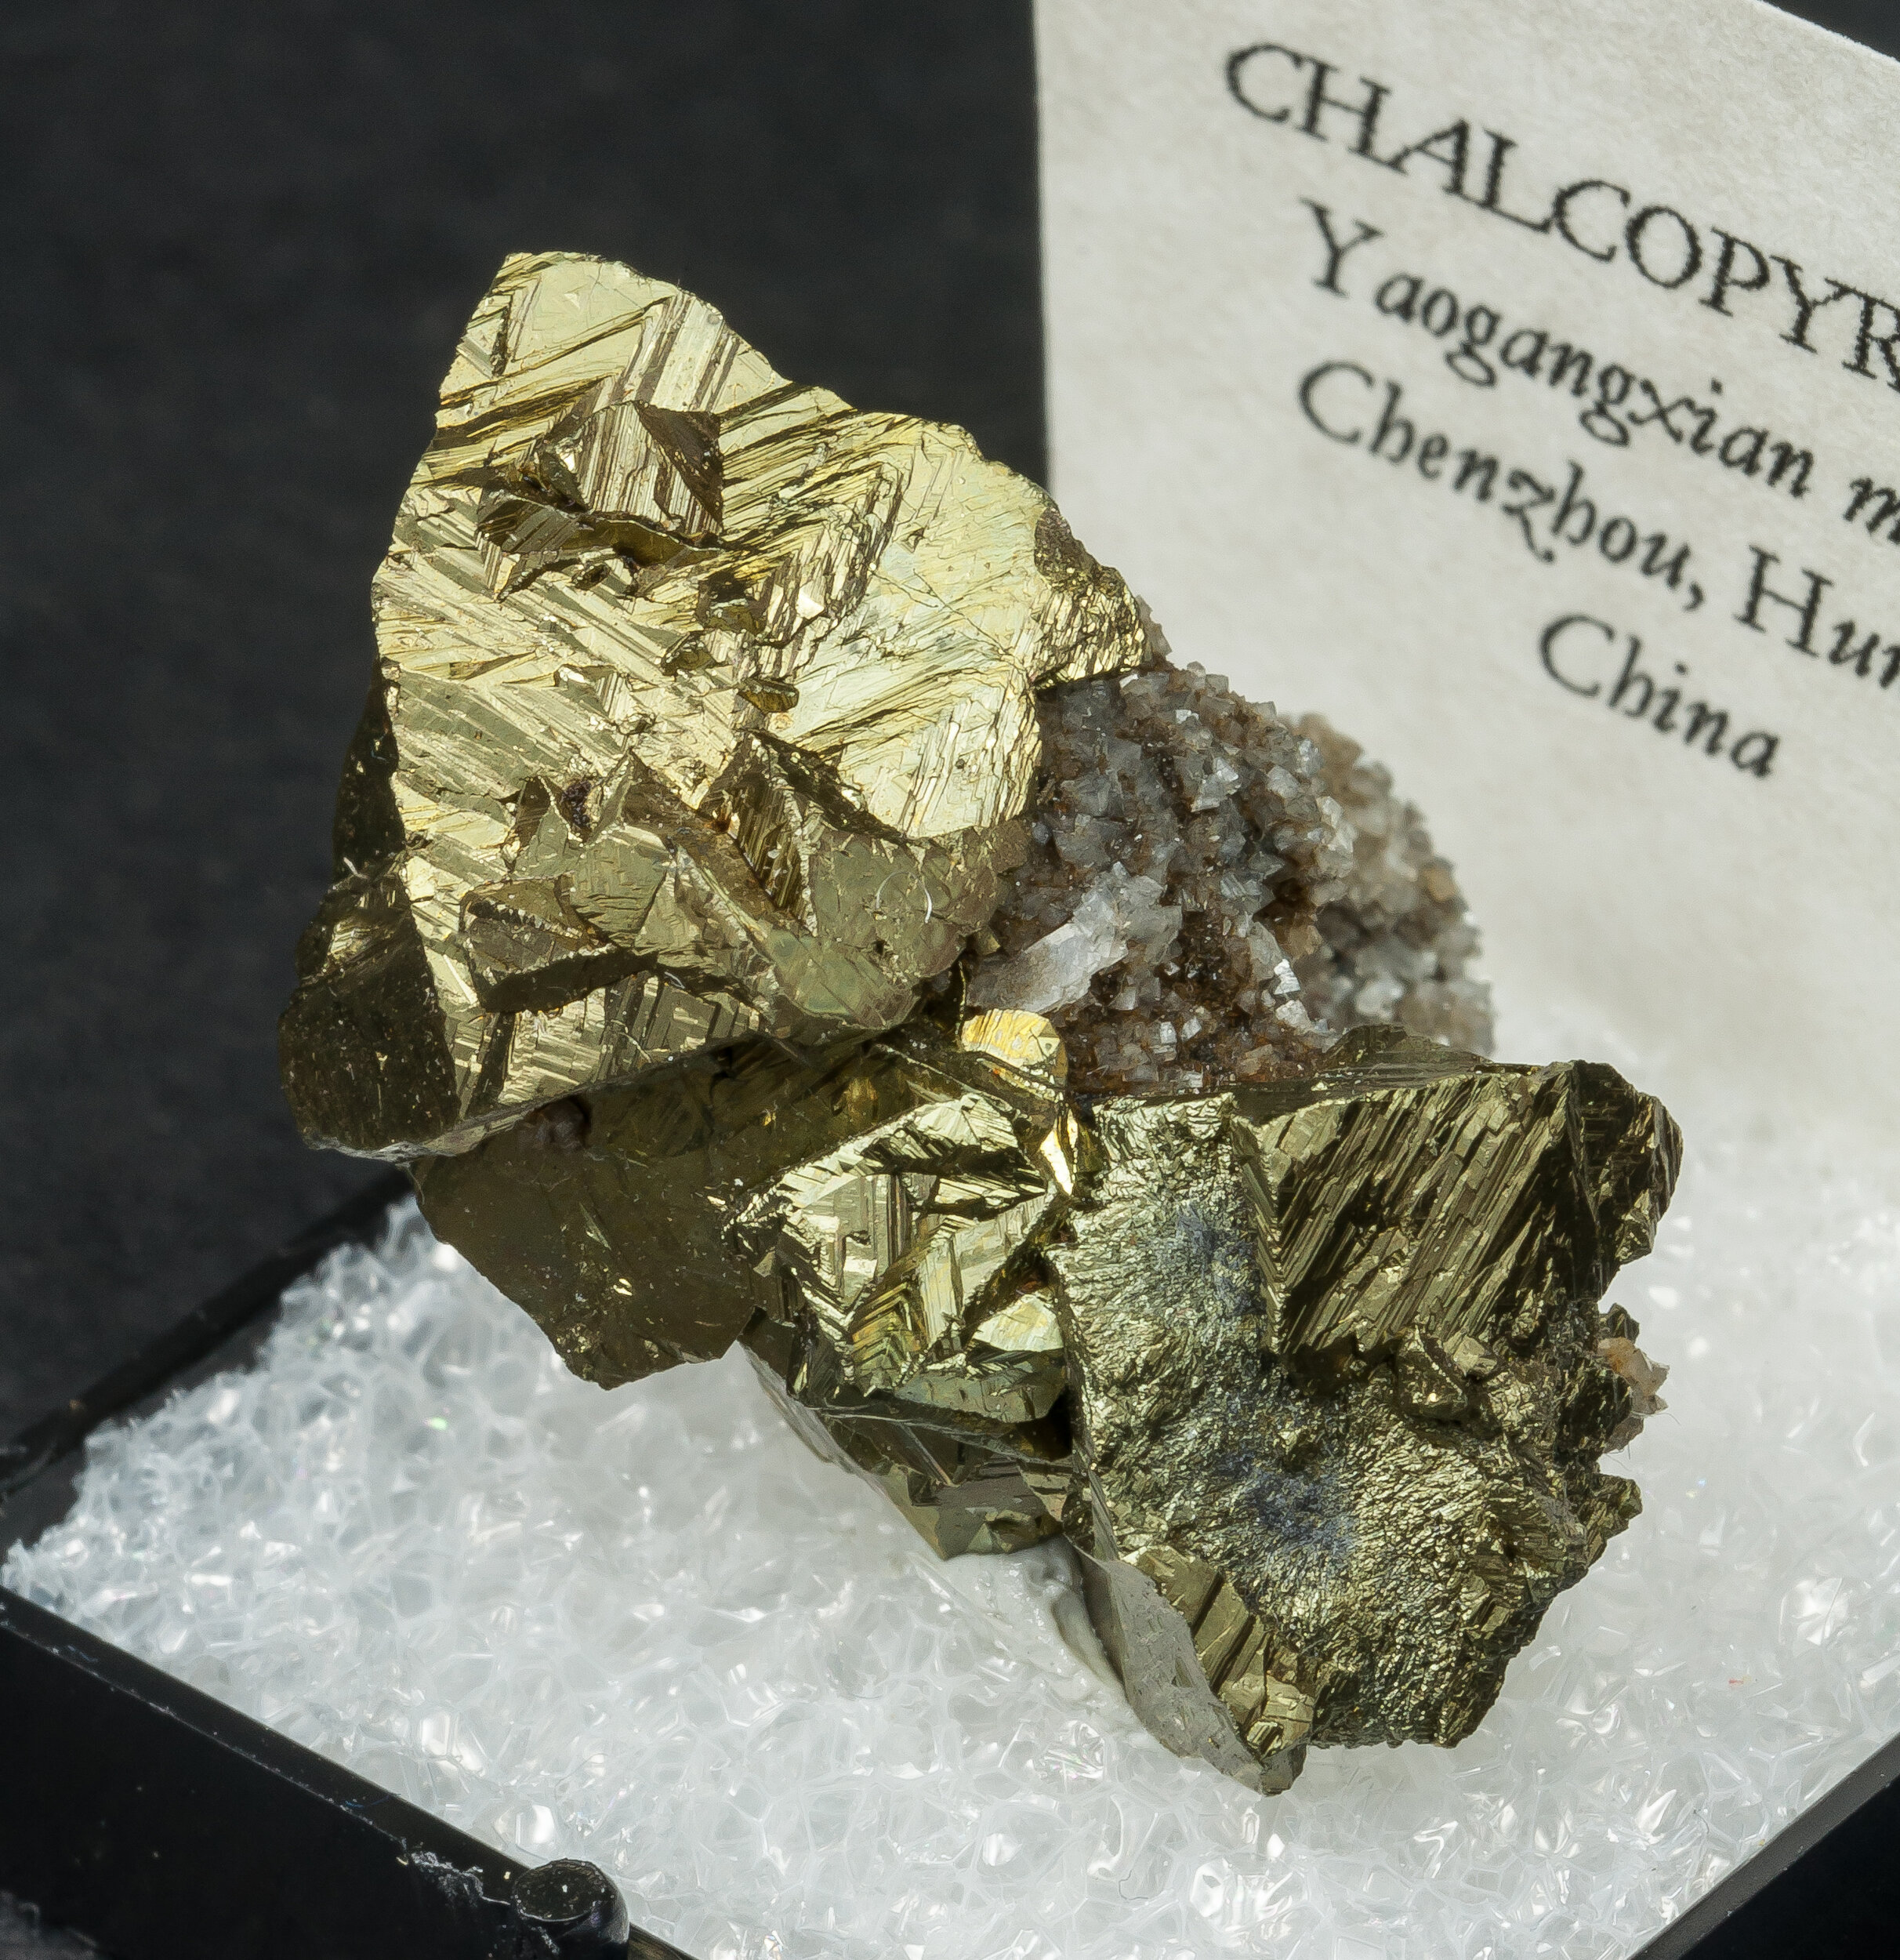 specimens/s_imagesAO3/Chalcopyrite-TAY36AO3s1.jpg